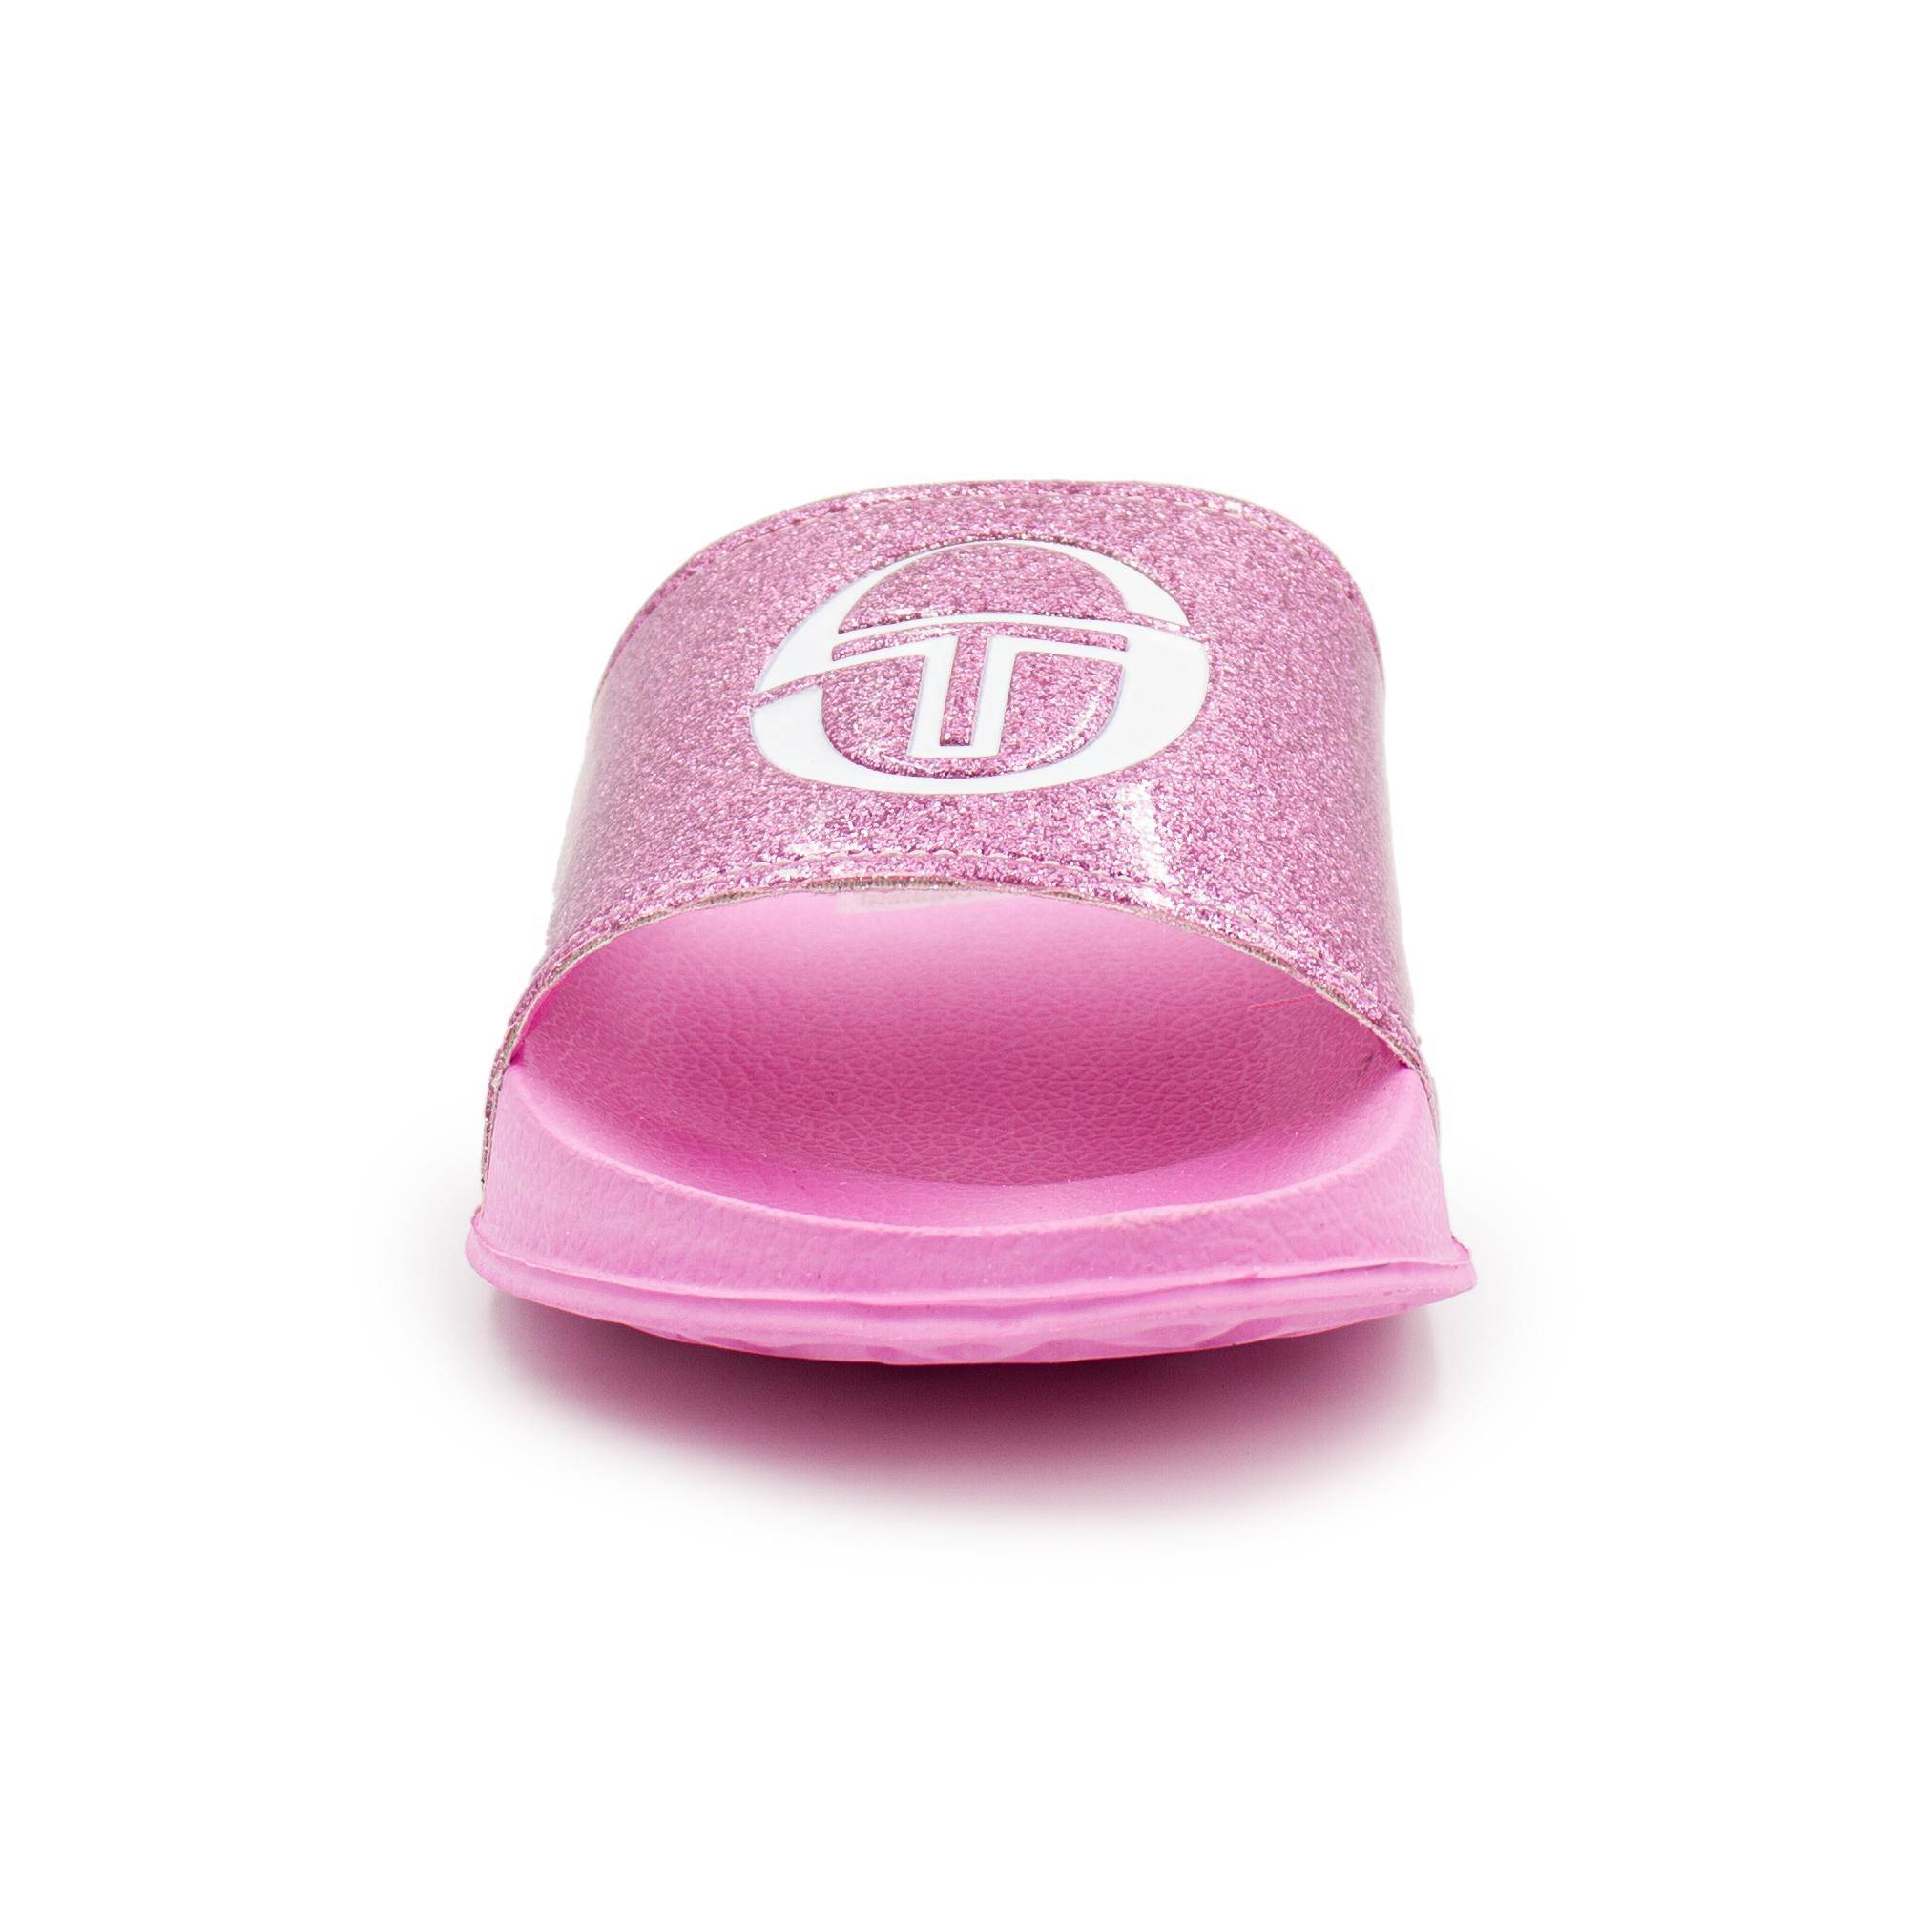 Женские сланцы Sergio Tacchini (REMIX GLITTER STW219006), розовые, цвет розовый, размер 41 - фото 3